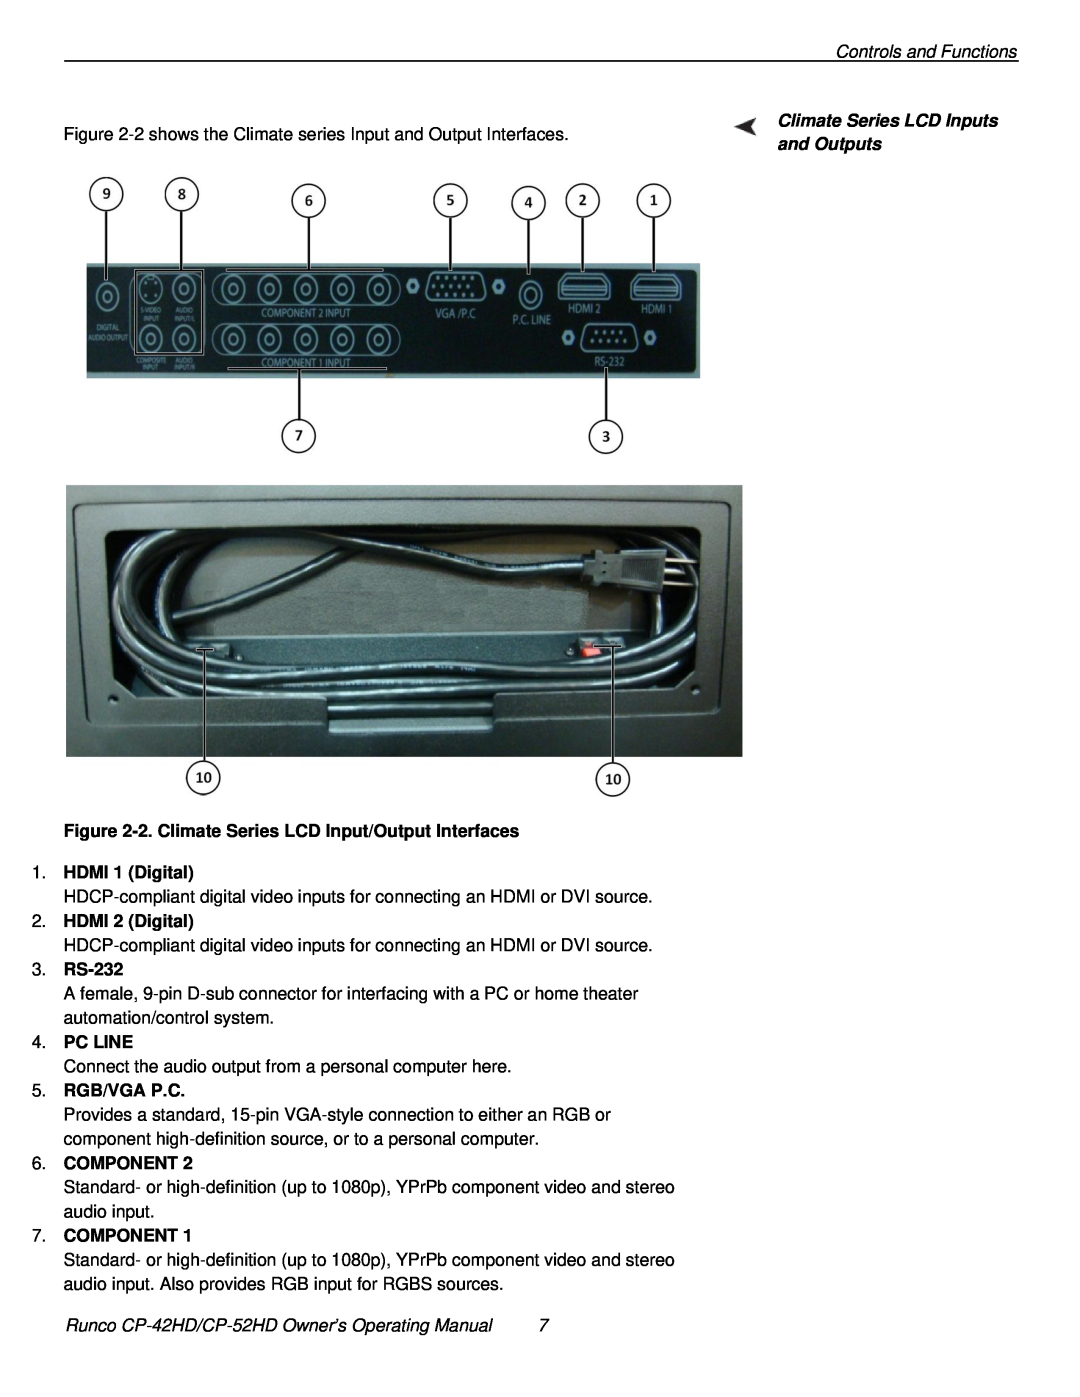 Runco CP-52HD manual Climate Series LCD Inputs, and Outputs, 2. Climate Series LCD Input/Output Interfaces, HDMI 1 Digital 